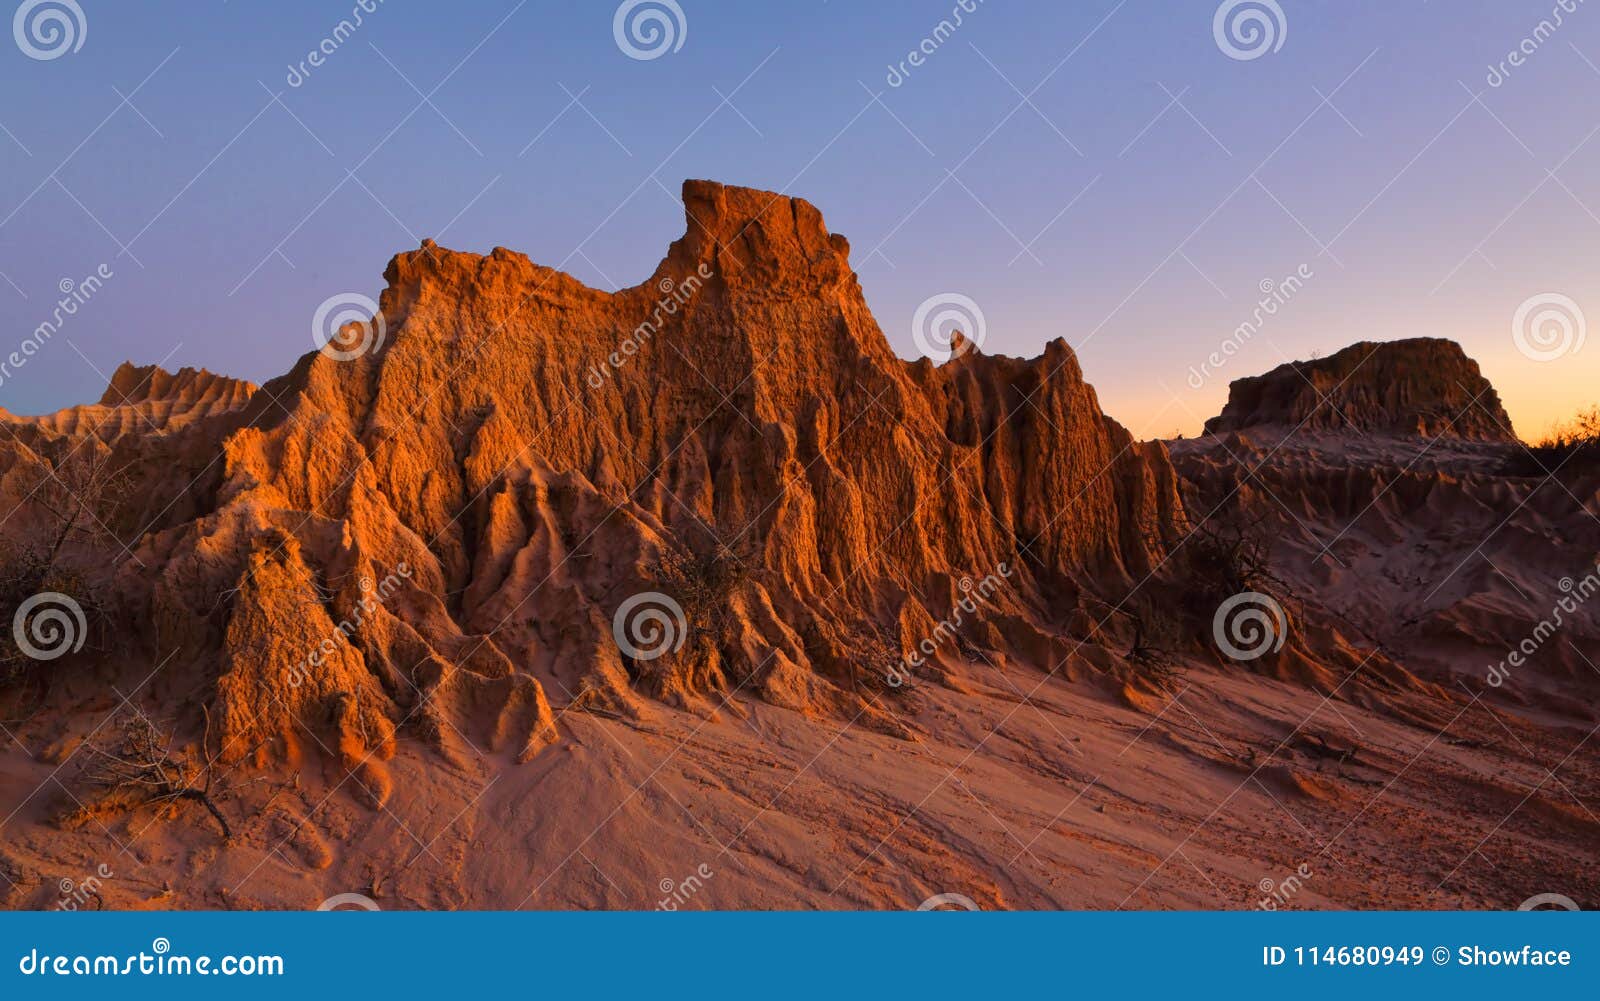 sculpted landforms in the desert